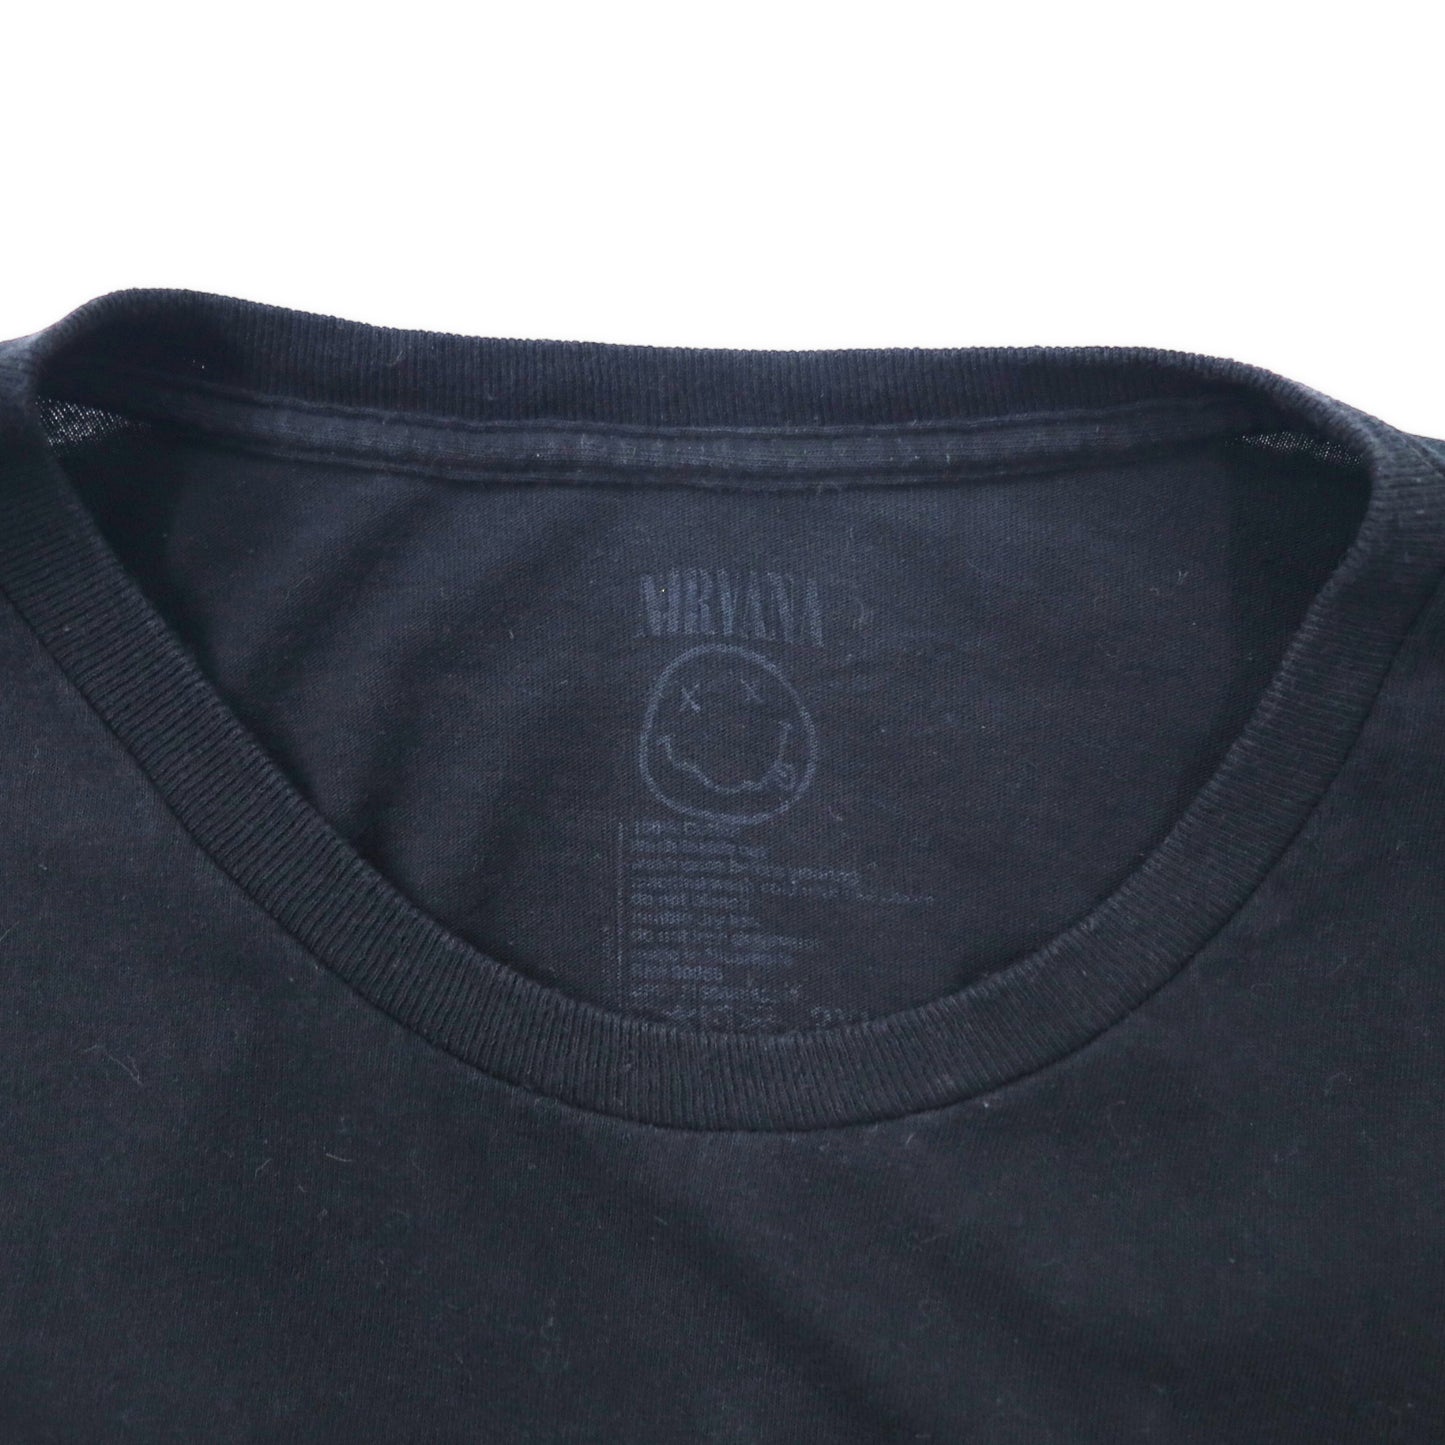 NIRVANA ニルヴァーナ バンドTシャツ 2XL ブラック コットン スマイリー ビッグサイズ